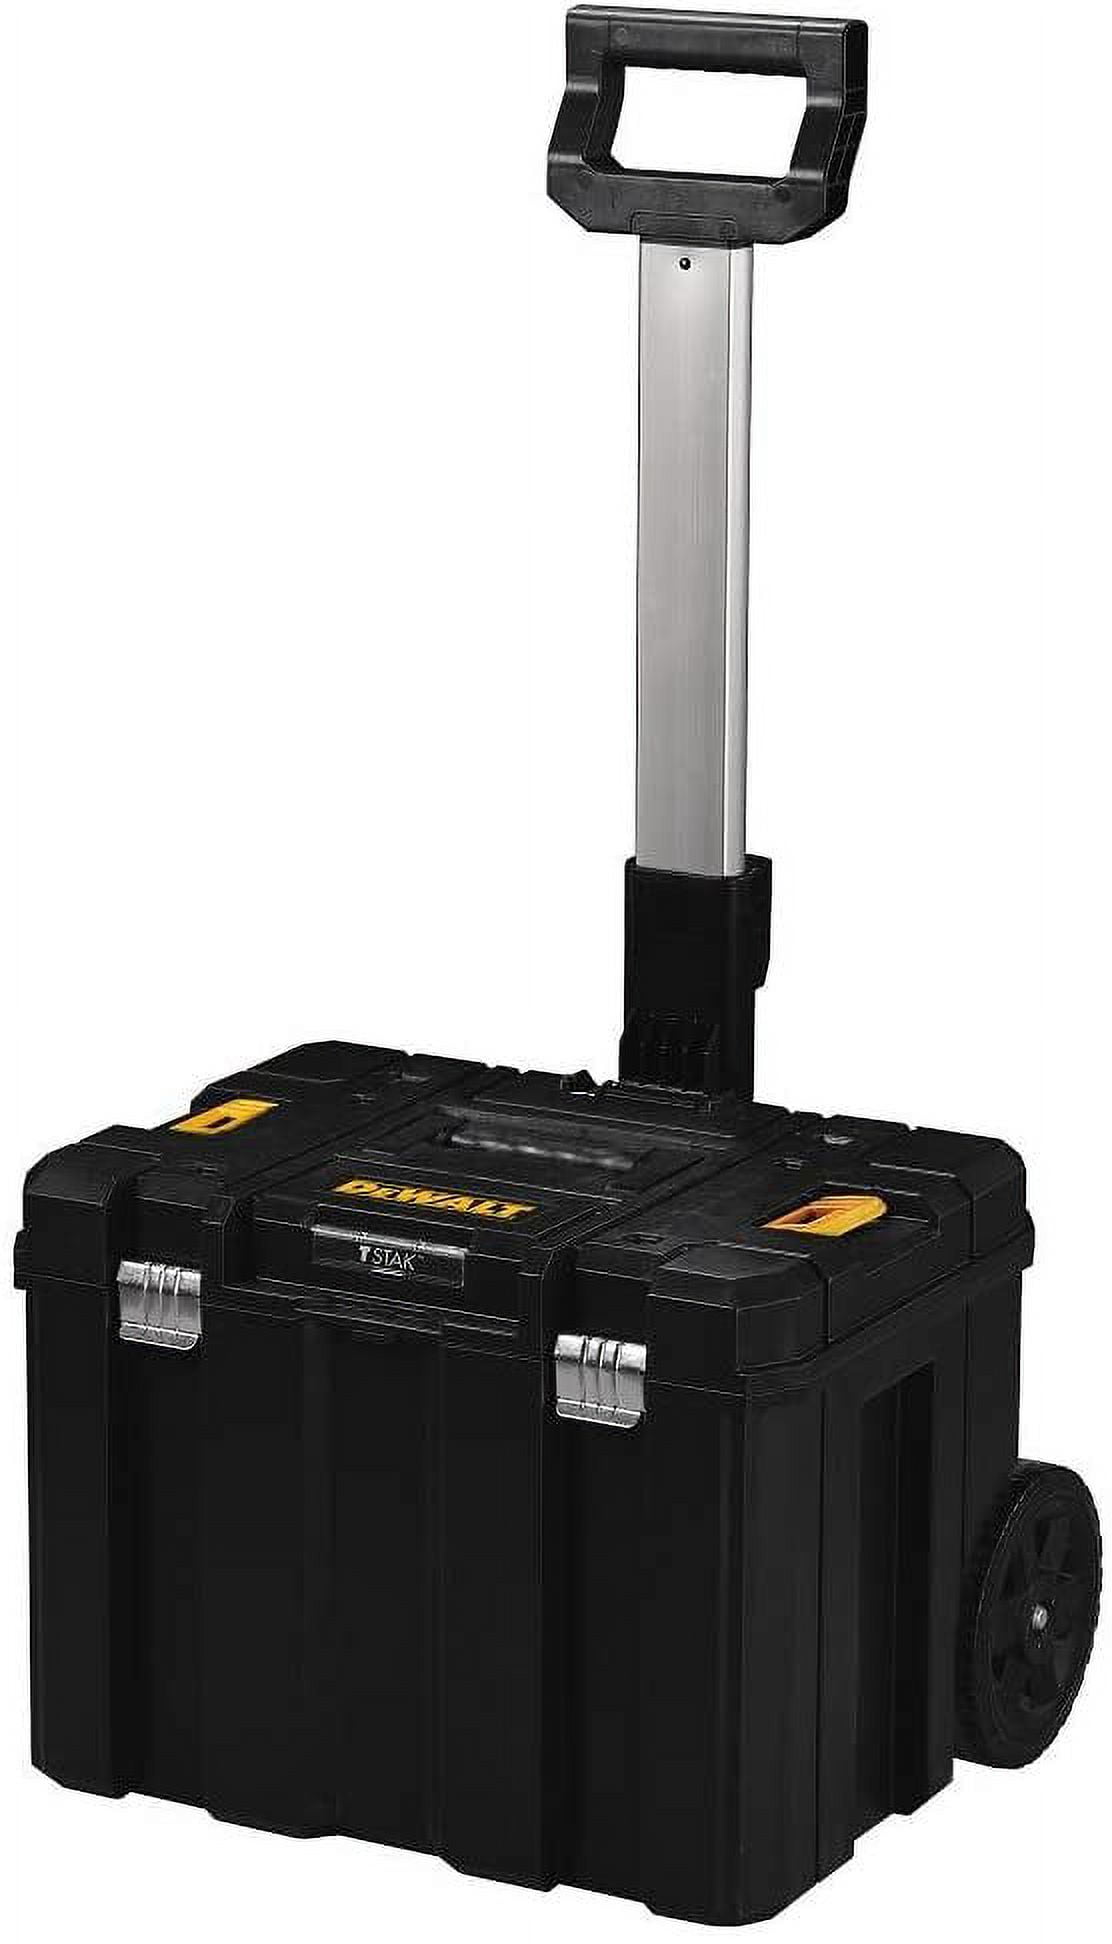 DeWalt DWST17807 TSTAK Ii Series Flat Top Tool Box, 66 Pound, Plastic,  Black, 4-Compartment: Tool Boxes Plastic (076174712155-1)